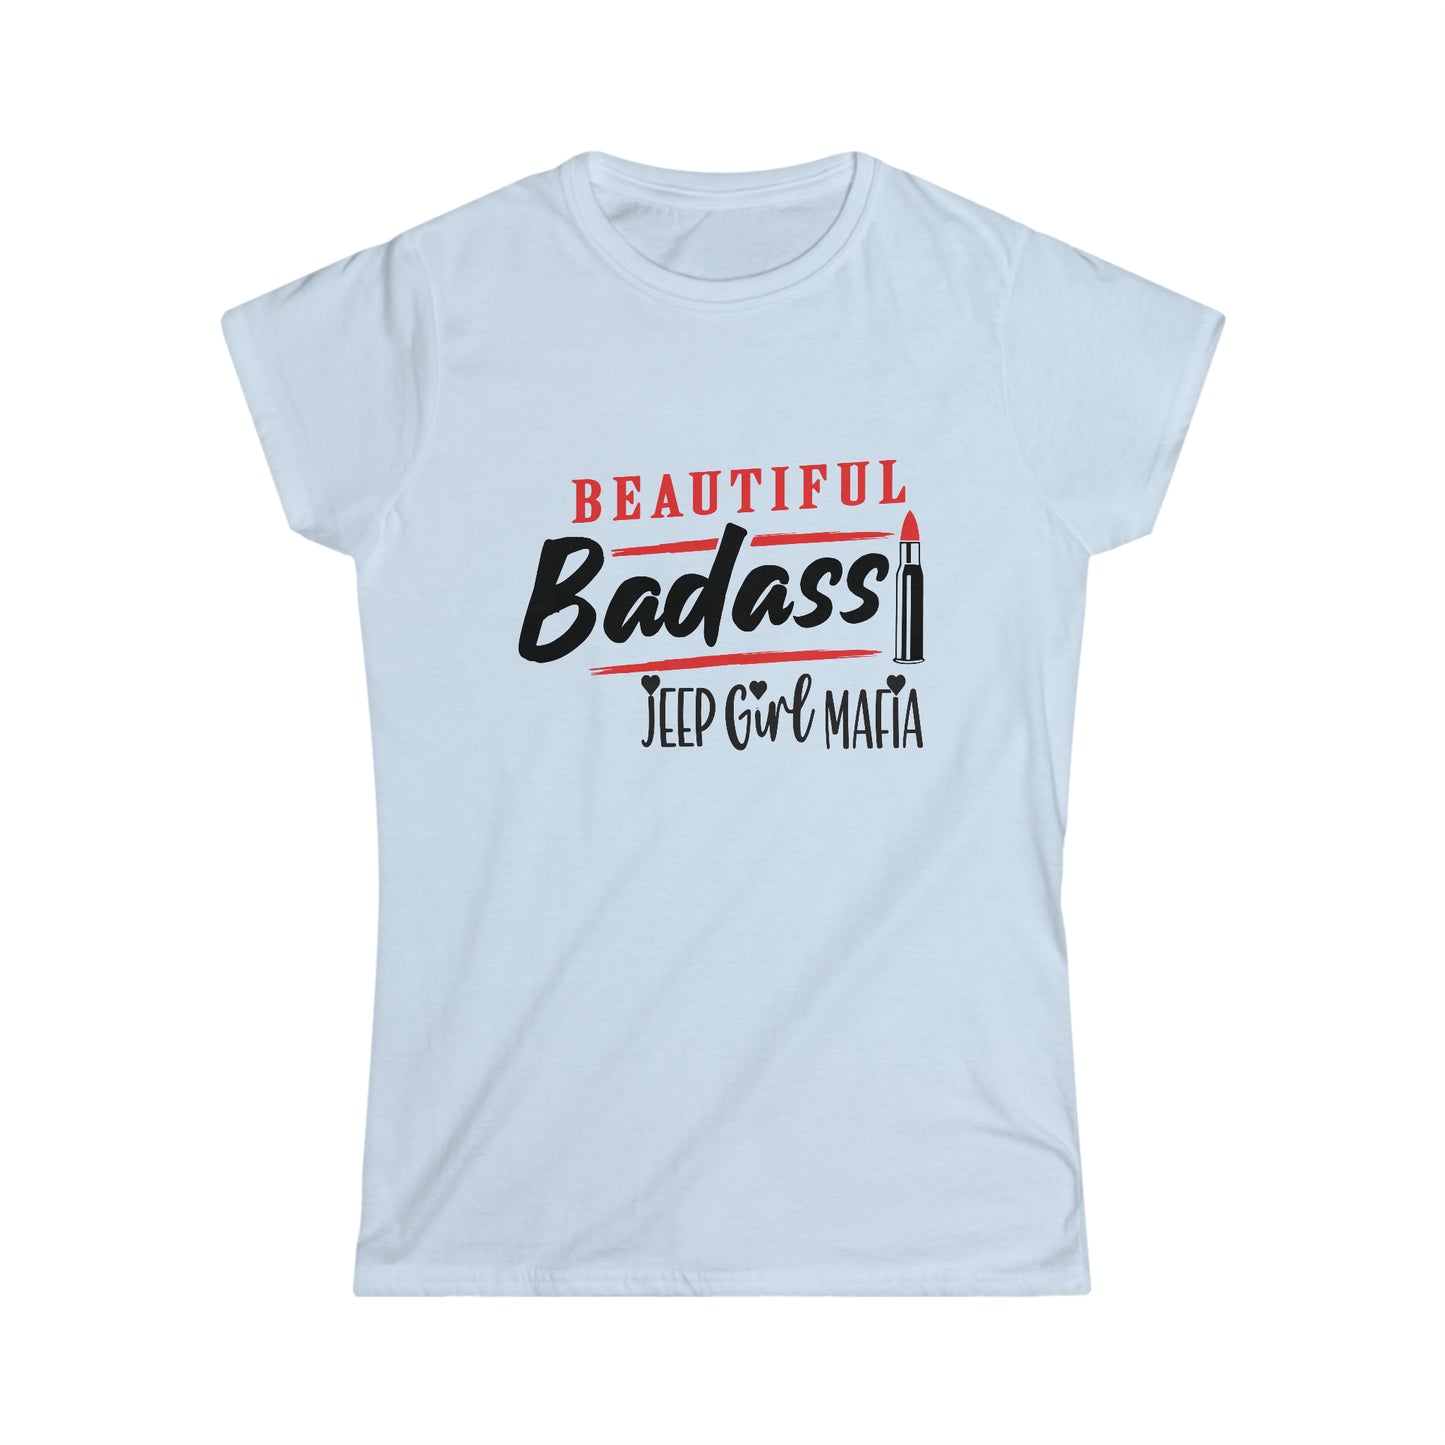 Beautiful Badass - Women's Softstyle Tee